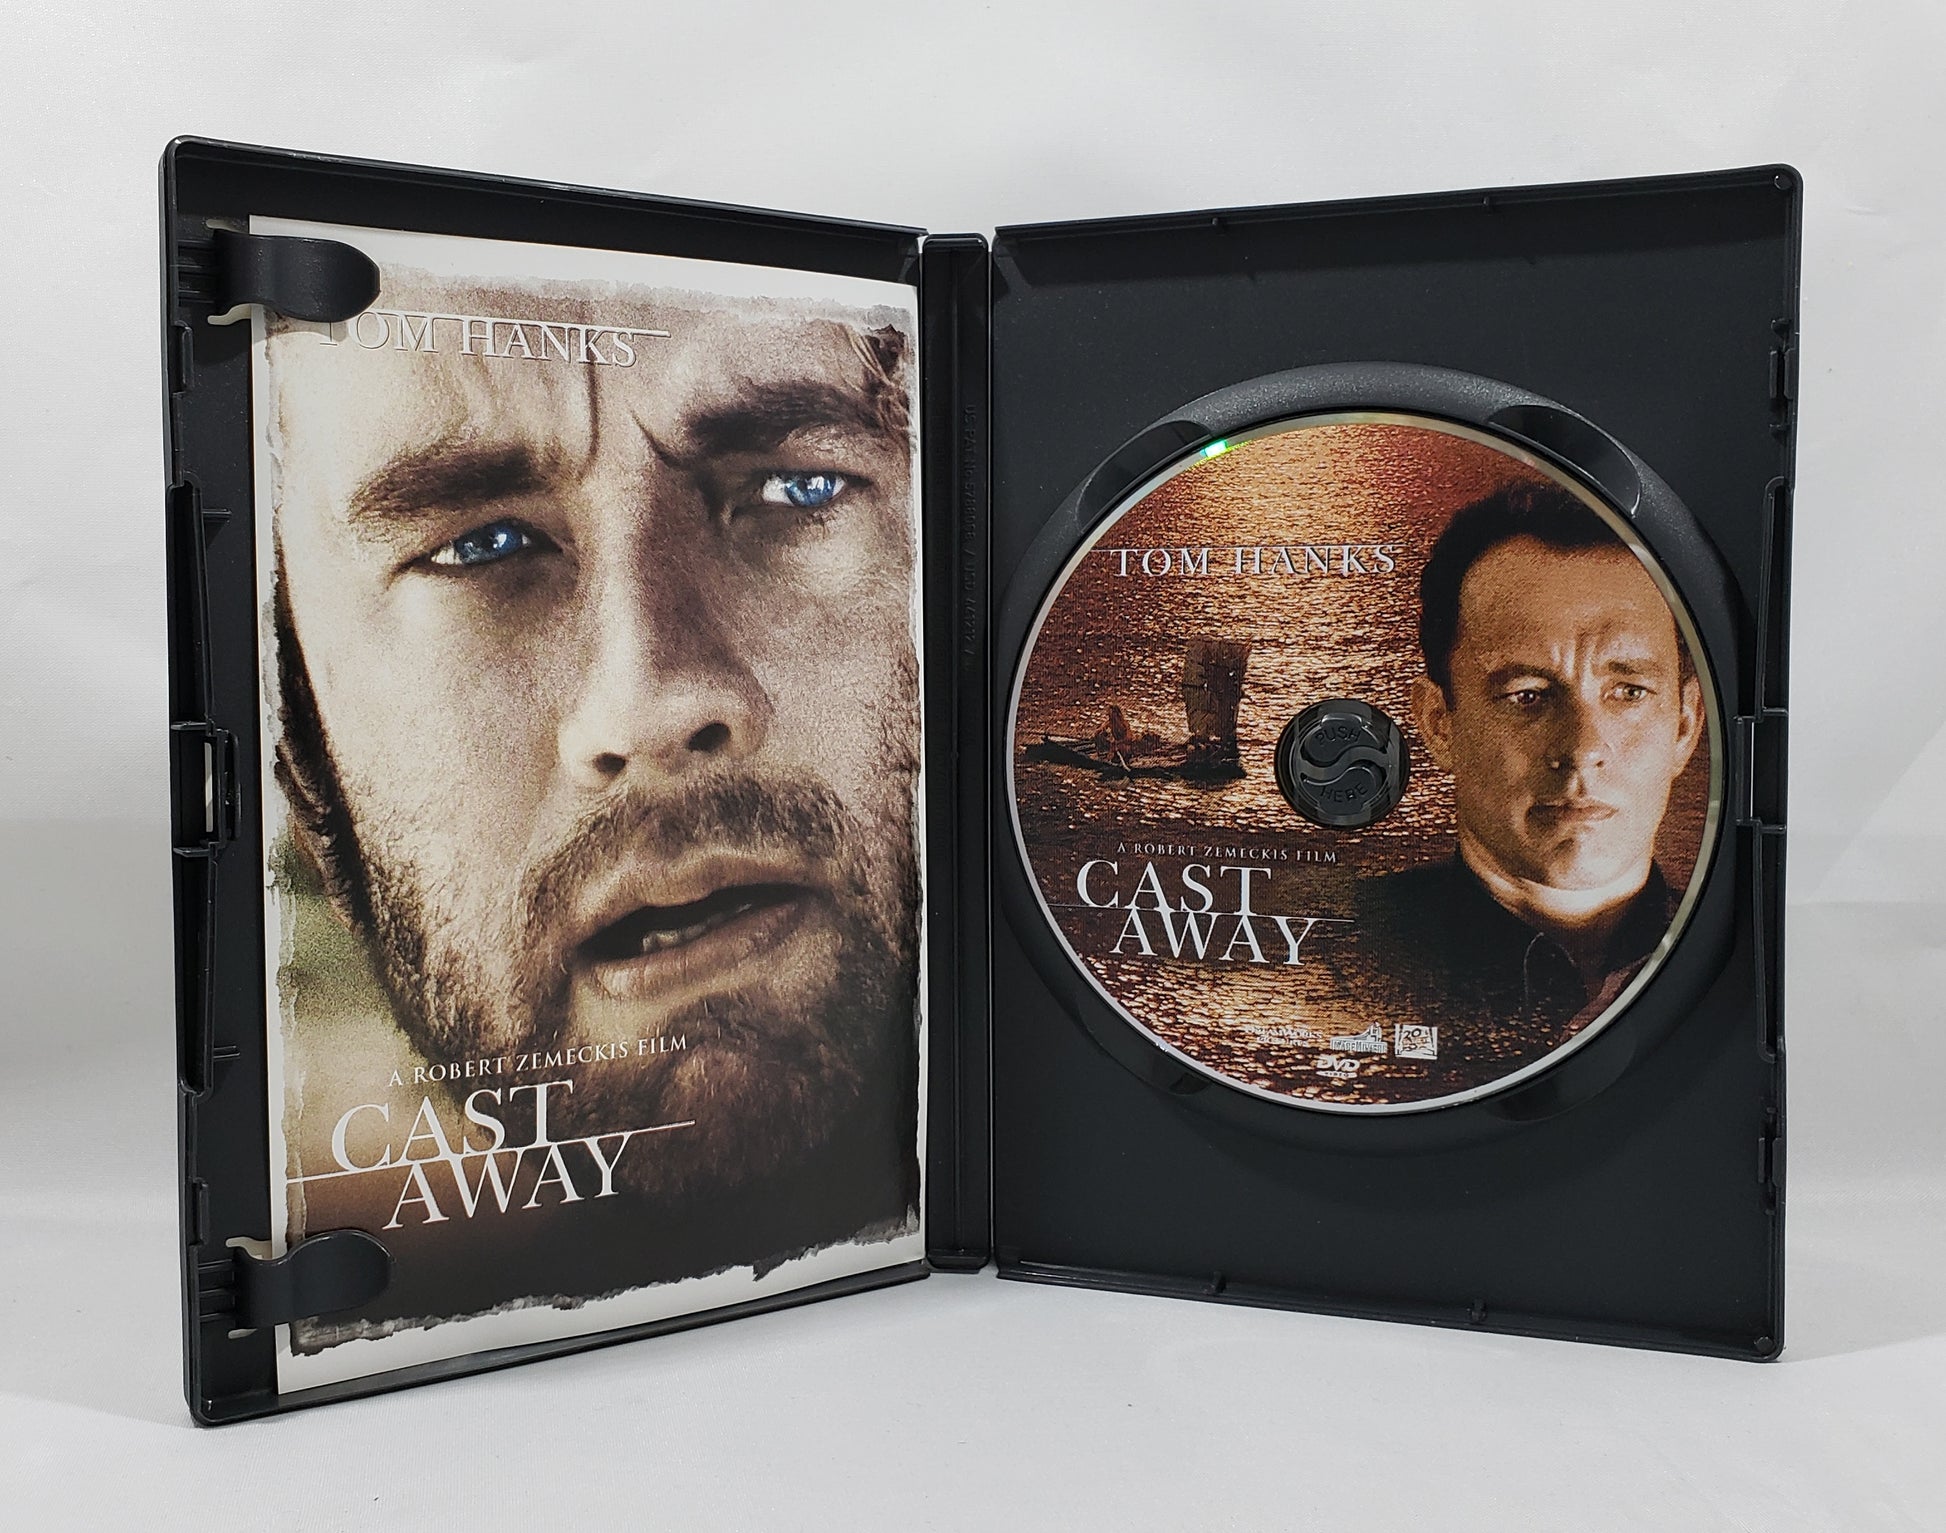 Cast Away [DVD, 2006, Single Disc Version Full Screen Edition]